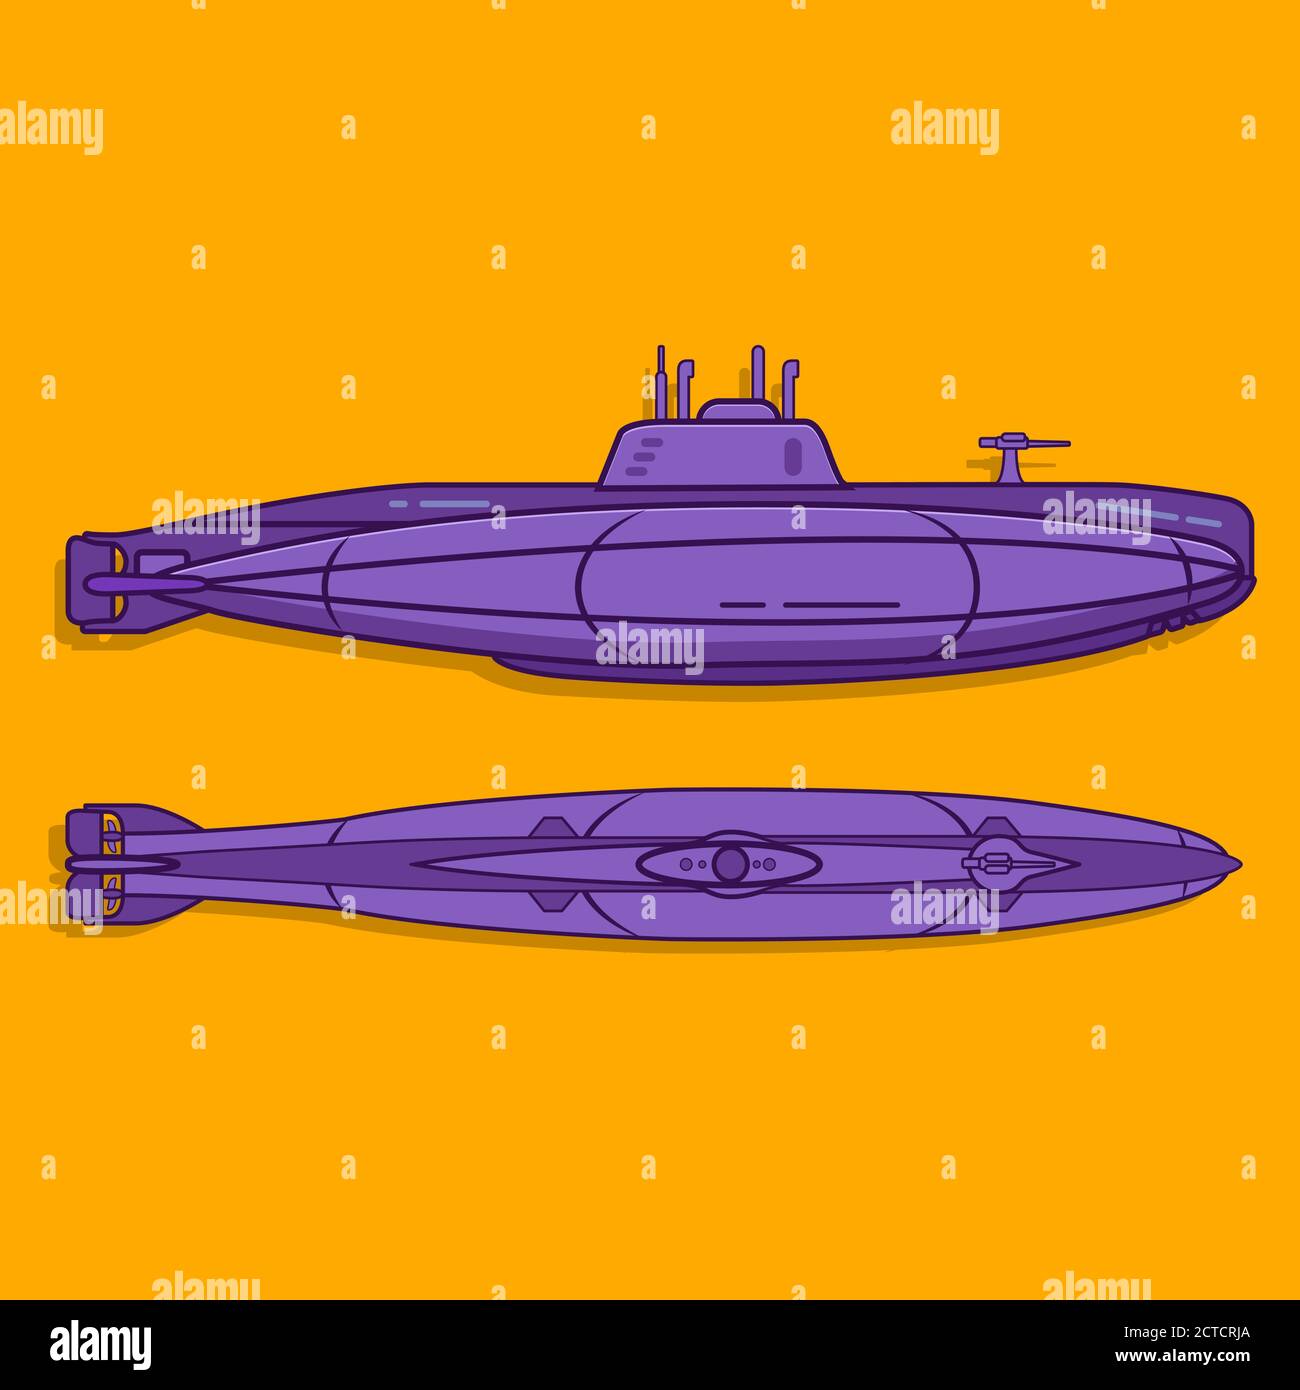 Sea submarine. Warship. Weapon of World War I and World War II. Stock Vector